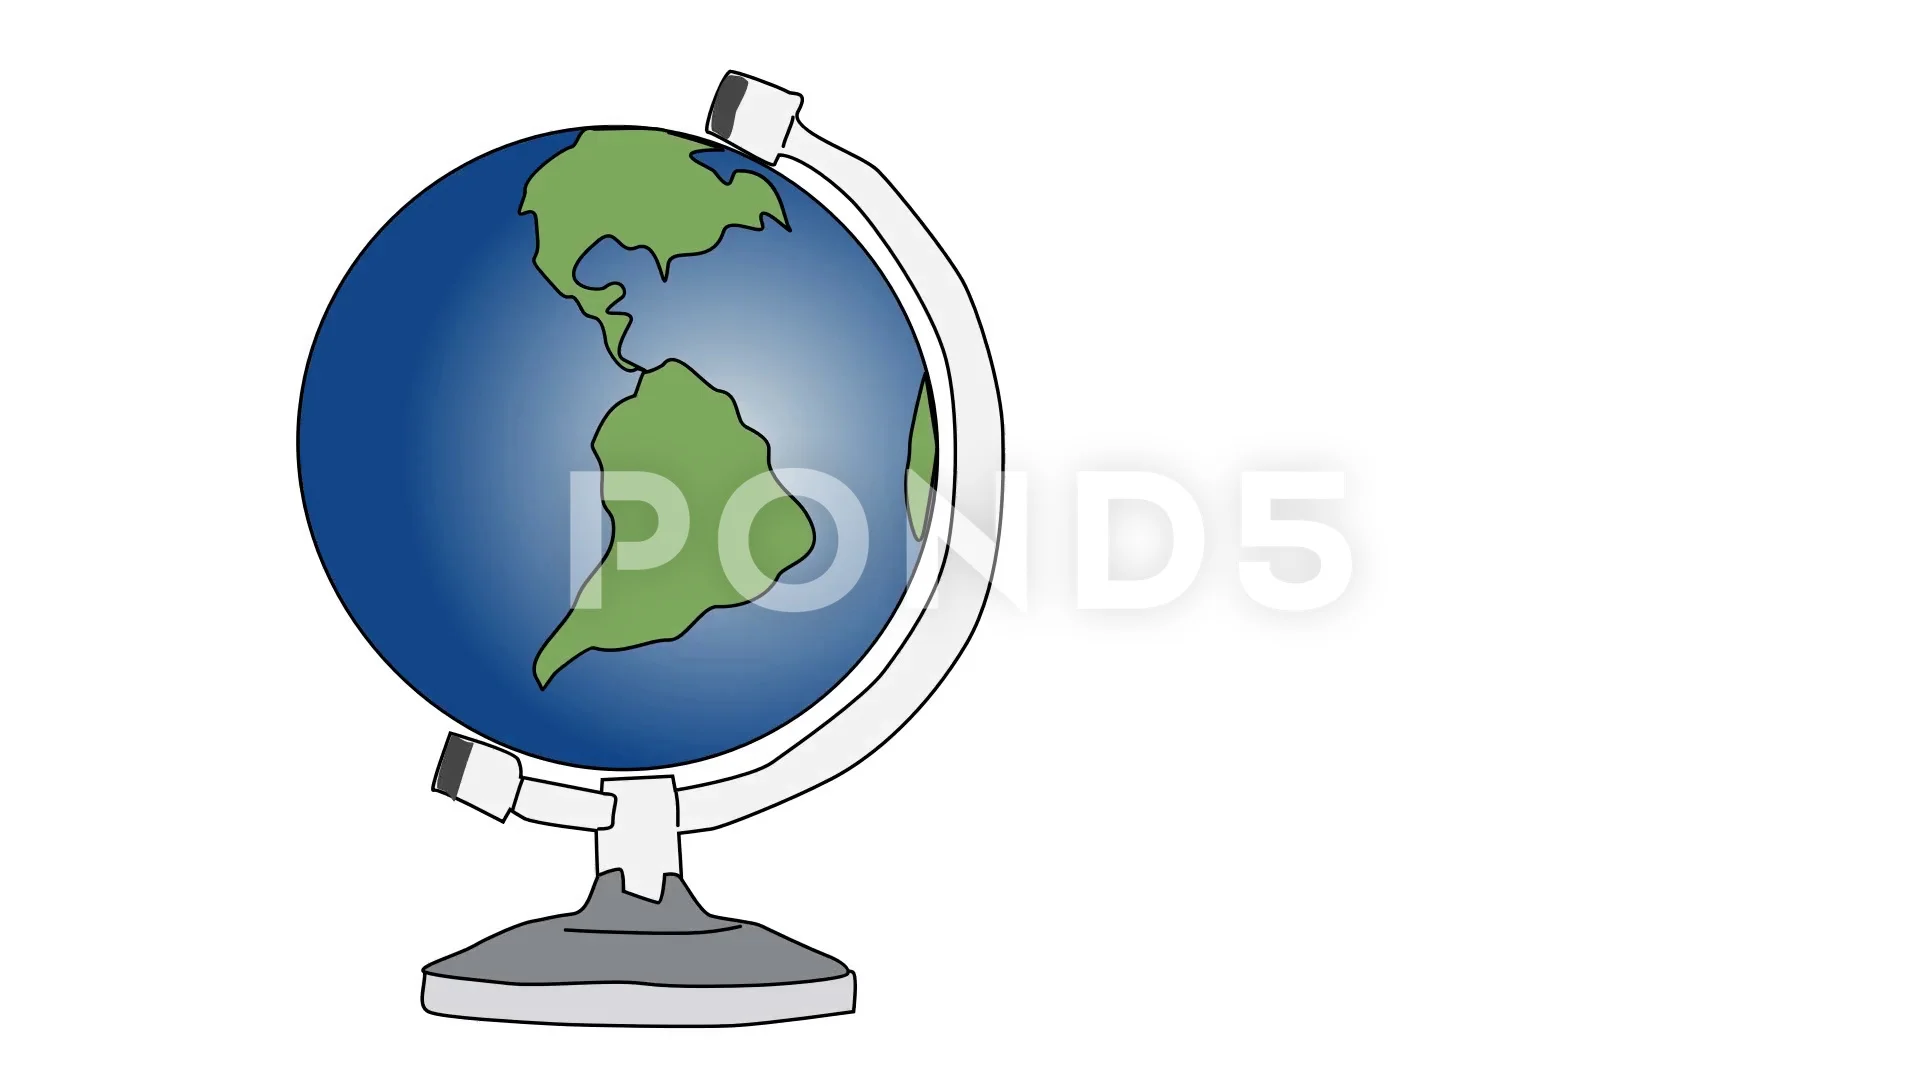 Globe terrestre stylisé illustration stock. Illustration du